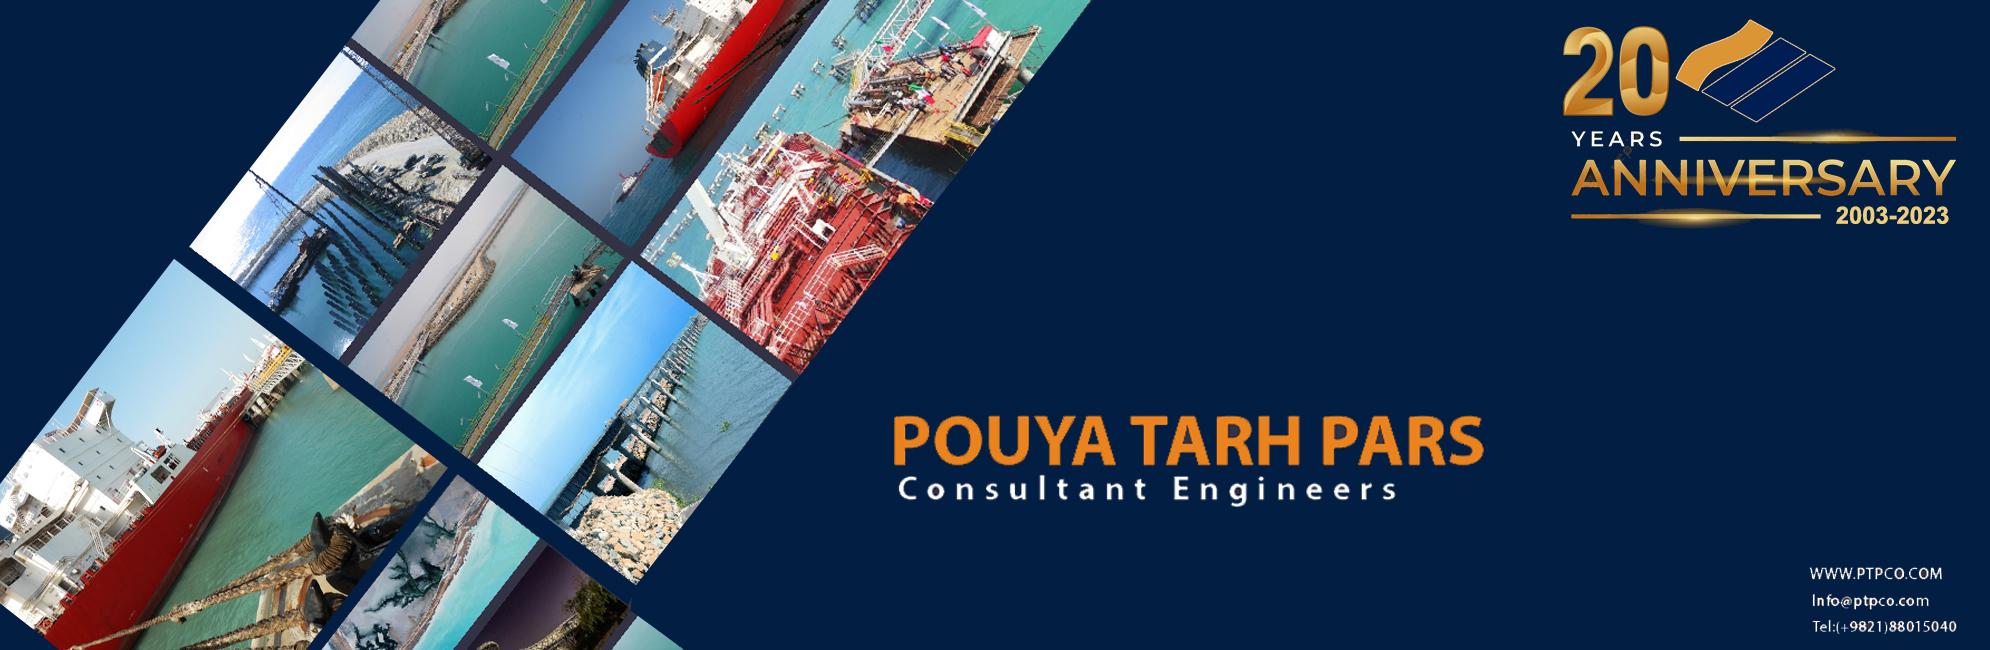 The 20th anniversary of the establishment of Poya Tarh Pars Co.